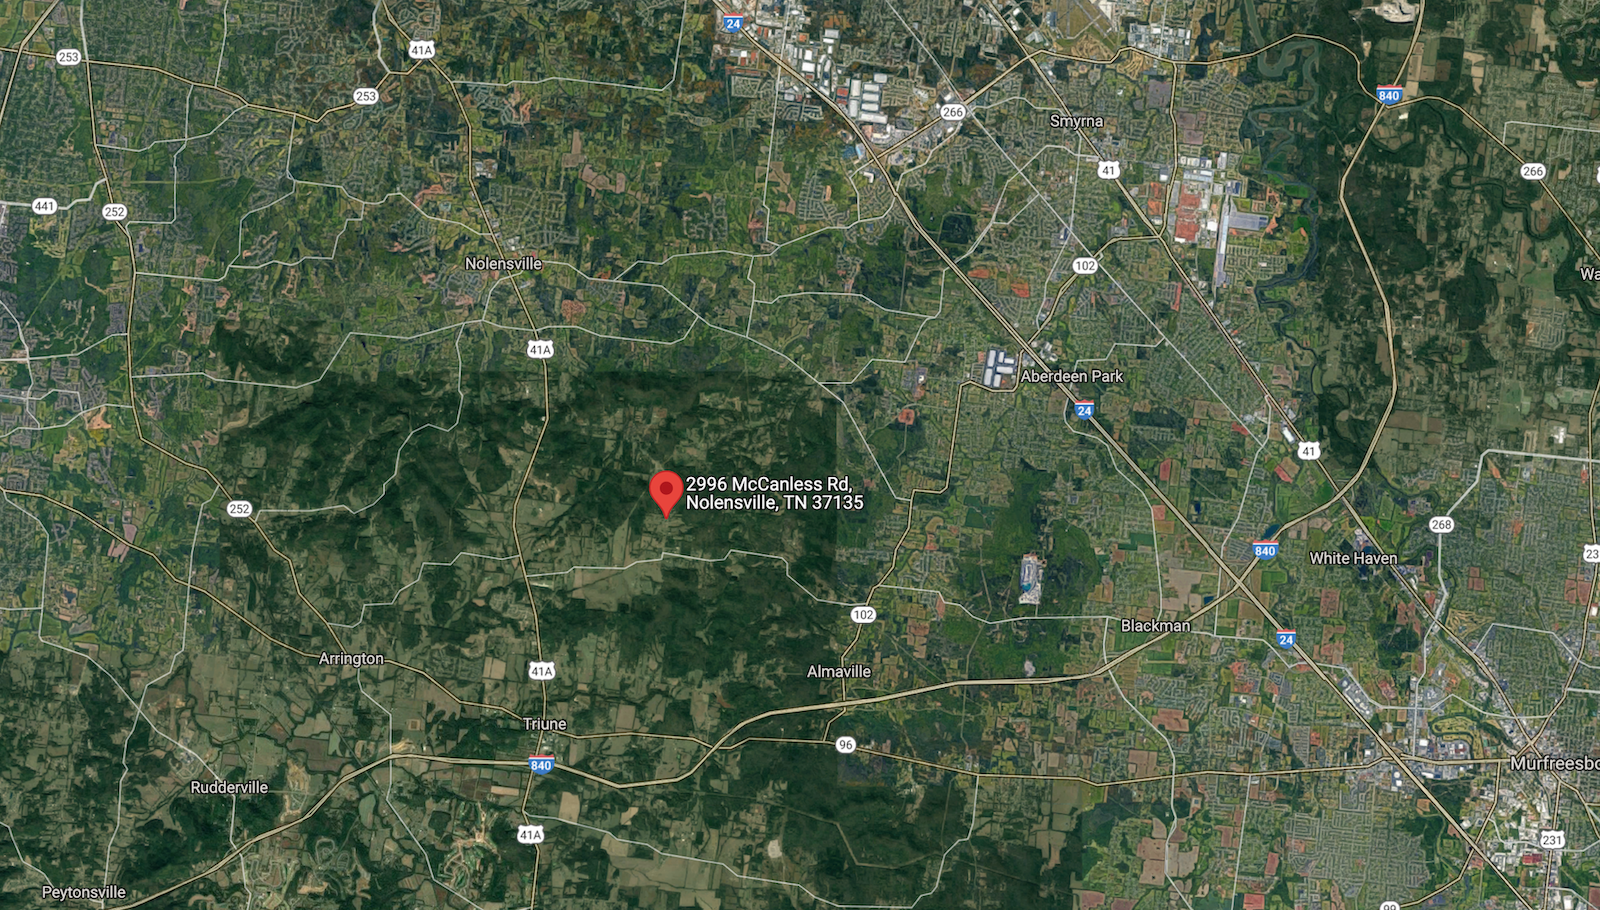 2996 McCanless Road - home for sale in Nolensville, TN near Murfreesboro, TN